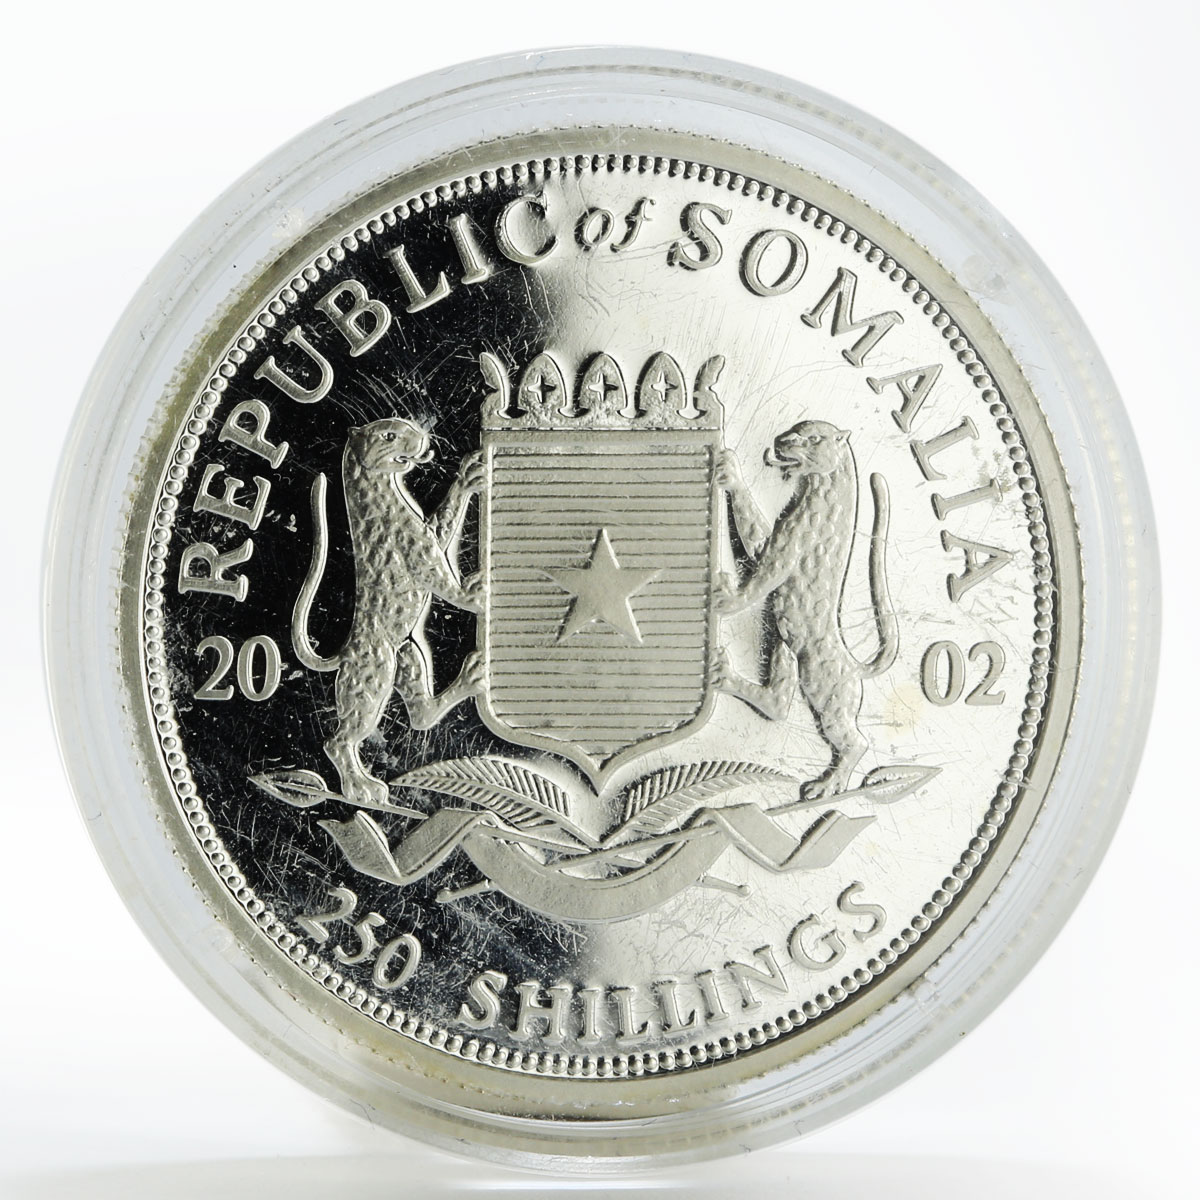 Somalia 250 shillings The Pilgrim Fathers Mayflower ship silver coin 2002